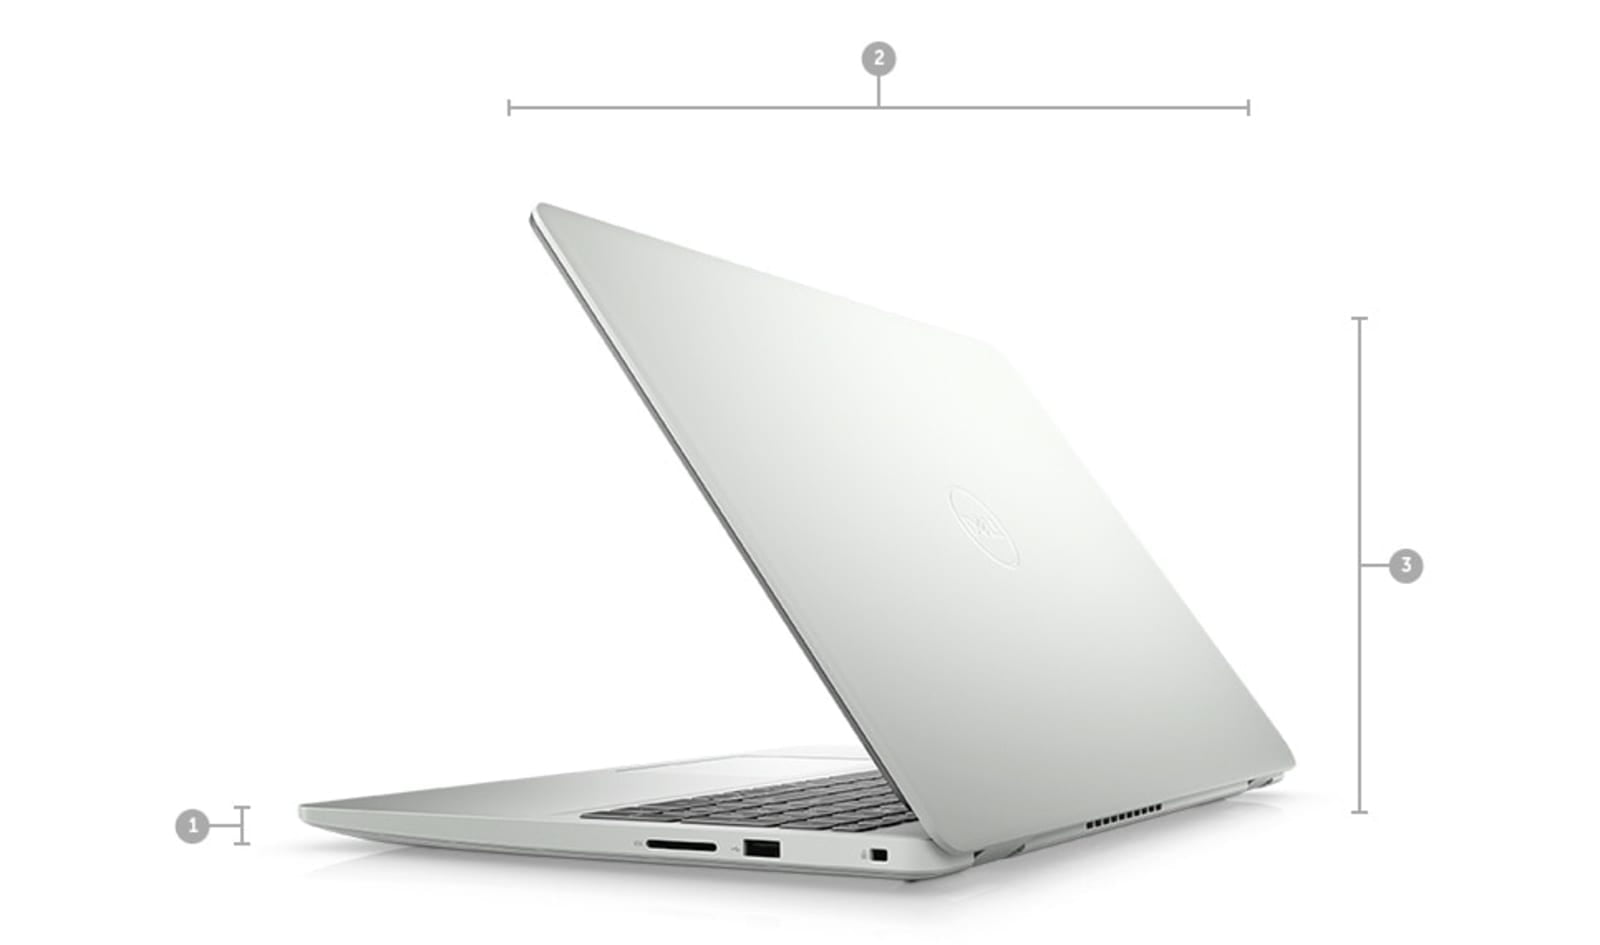 Dell Inspiron 15 3505 Laptop (2020) | 15.6